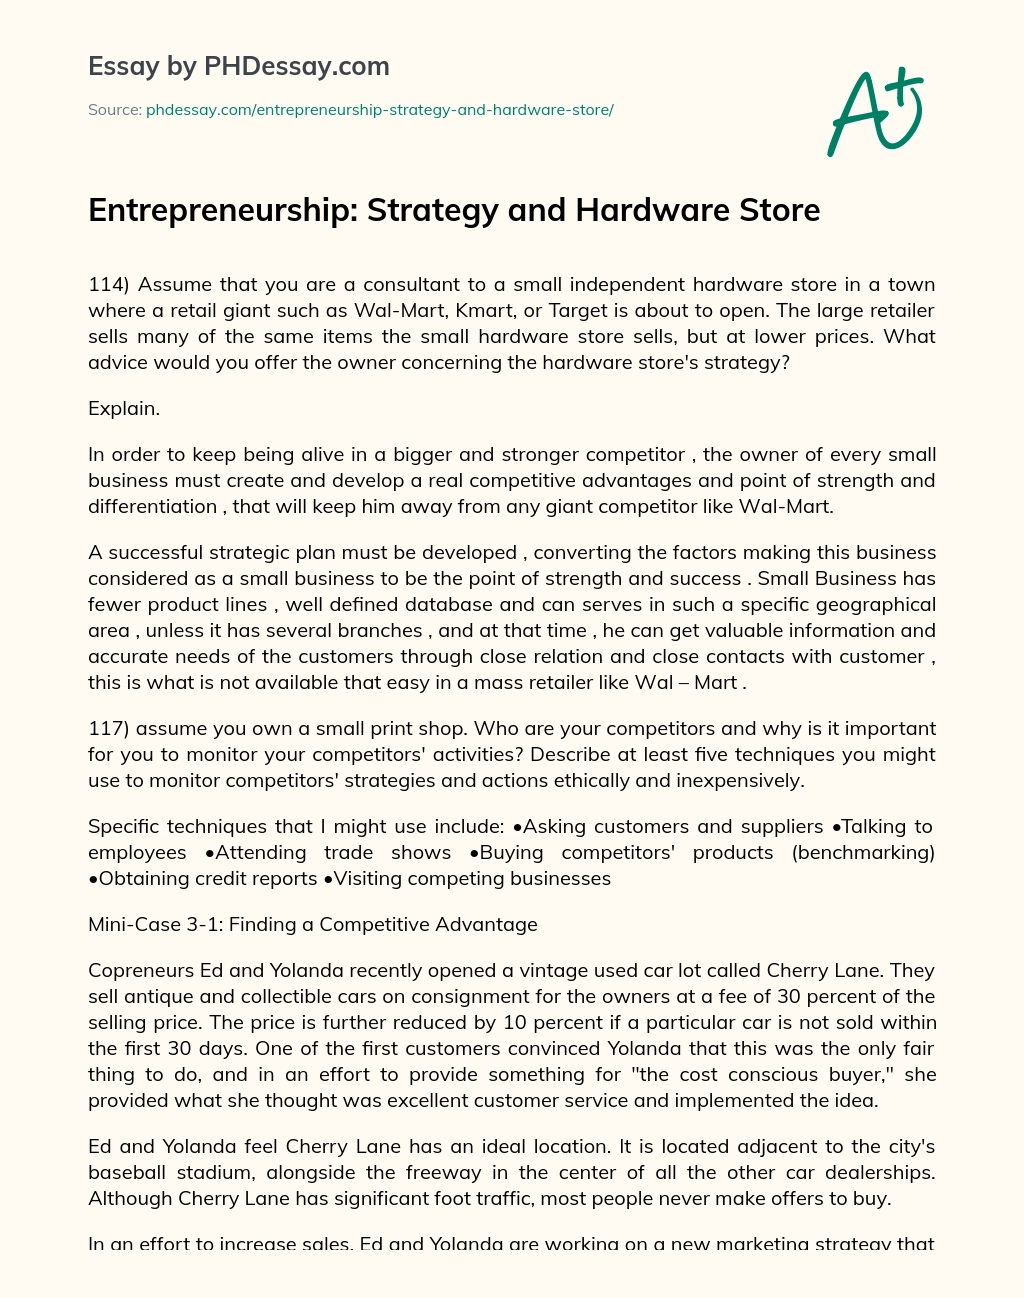 Entrepreneurship: Strategy and Hardware Store essay